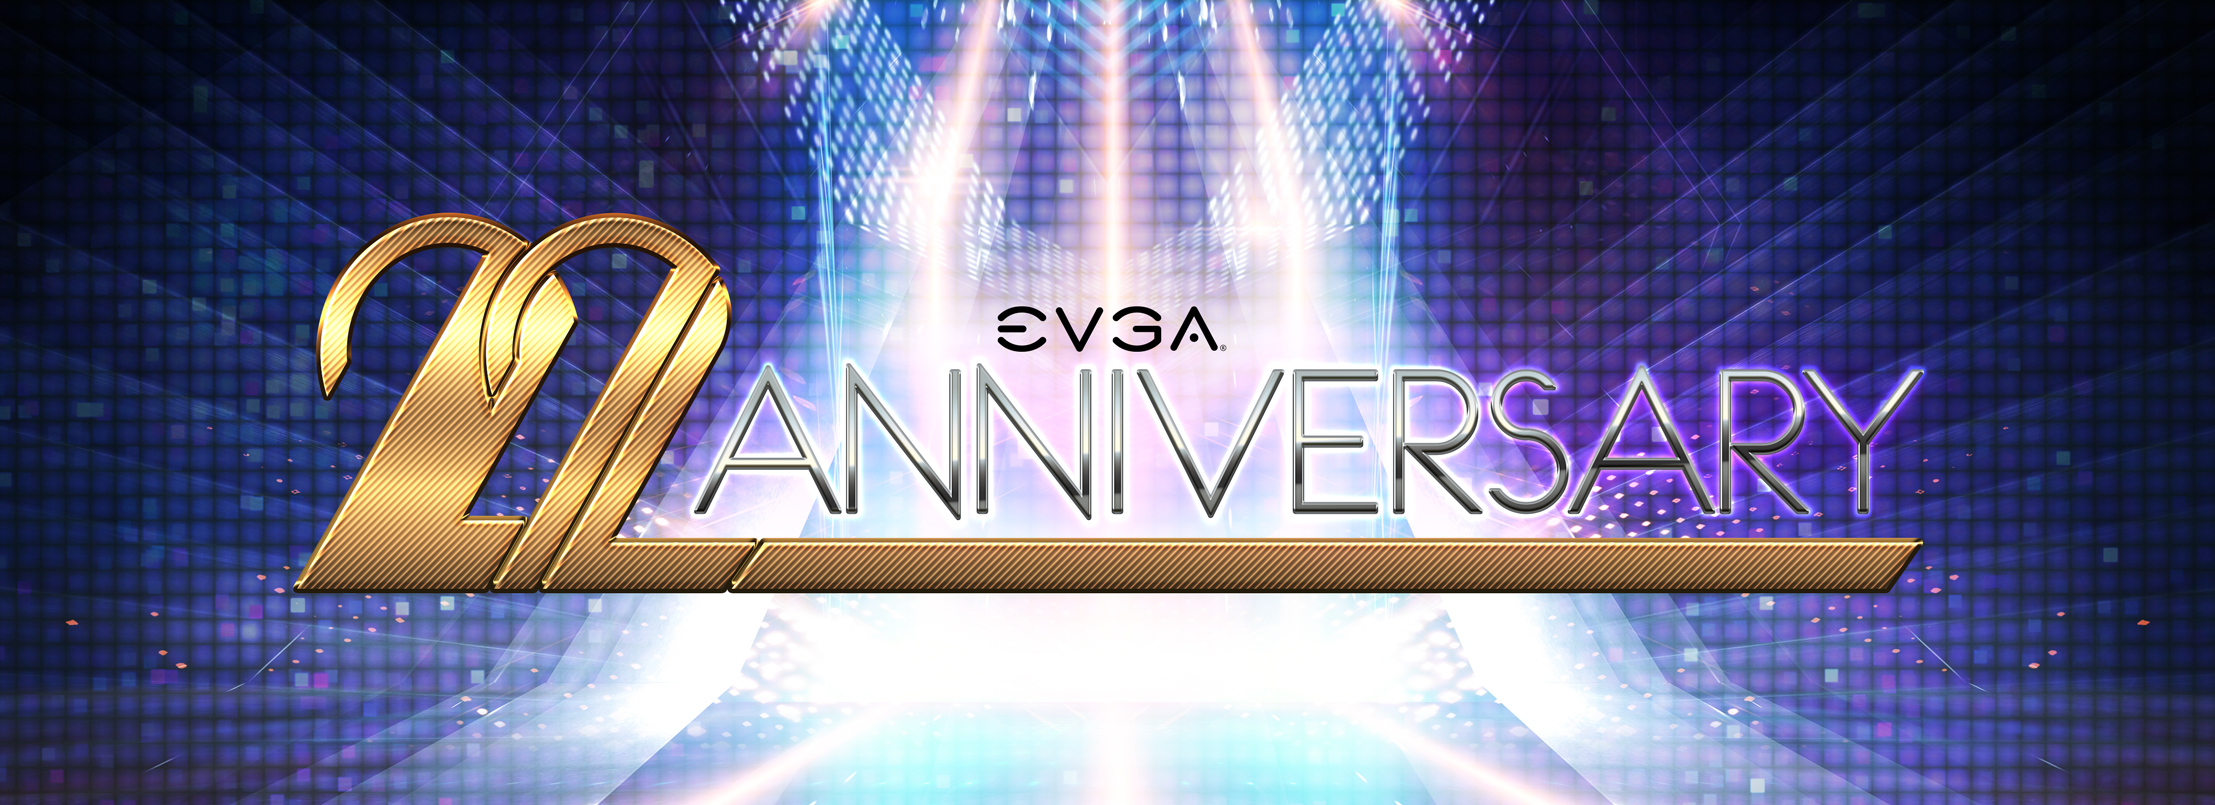 EVGA's 22nd Anniversary - NVIDIA Broadcast